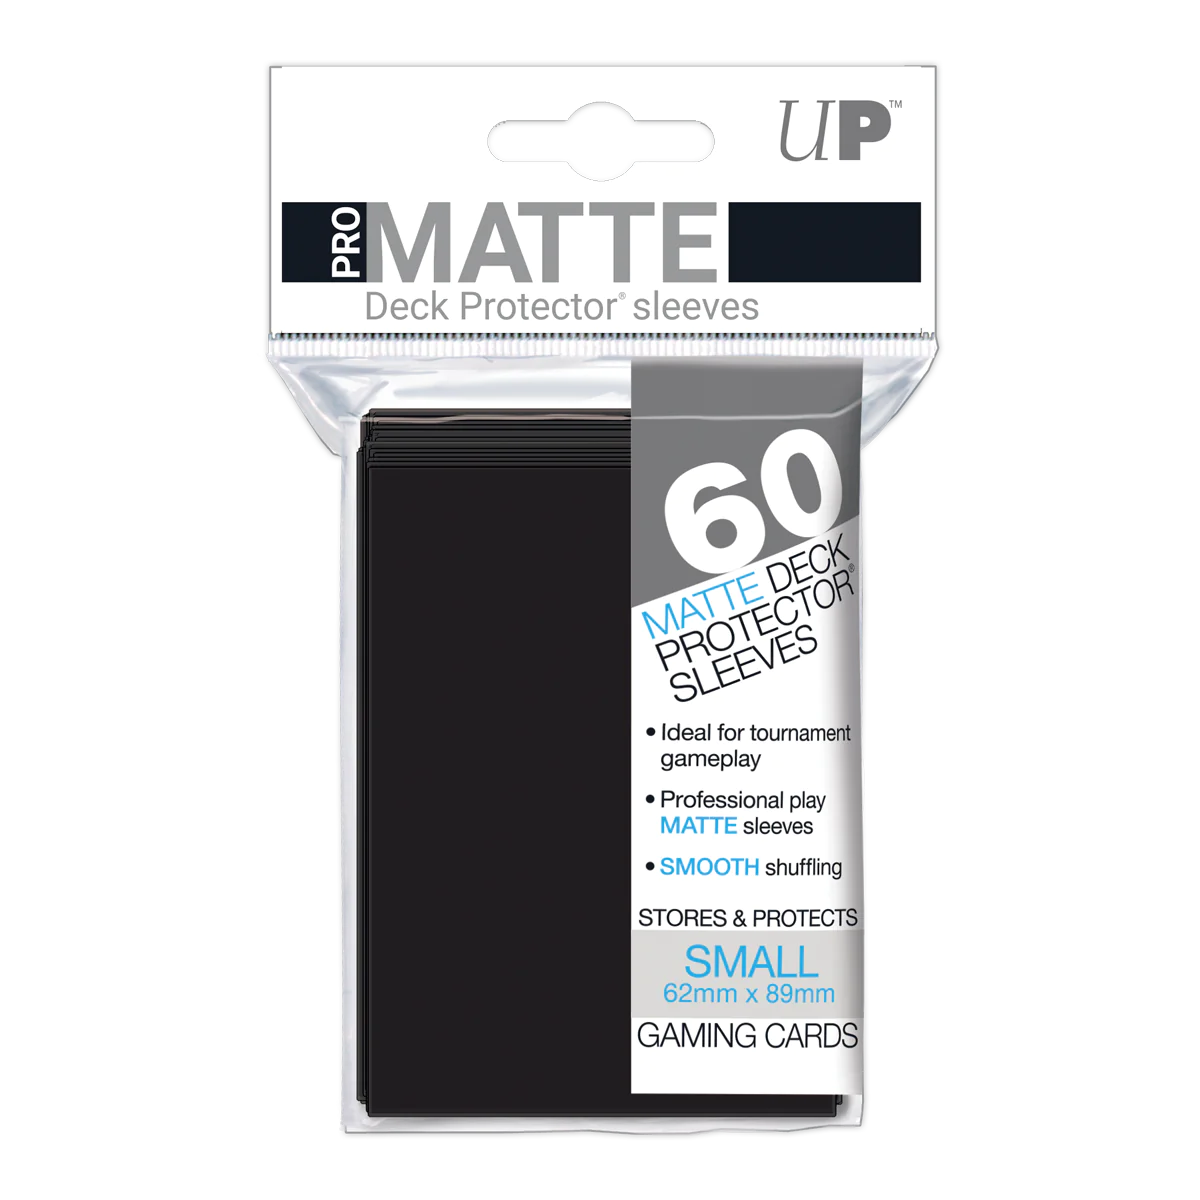 Ultra Pro Pro-Matte 60ct Small Size Sleeves